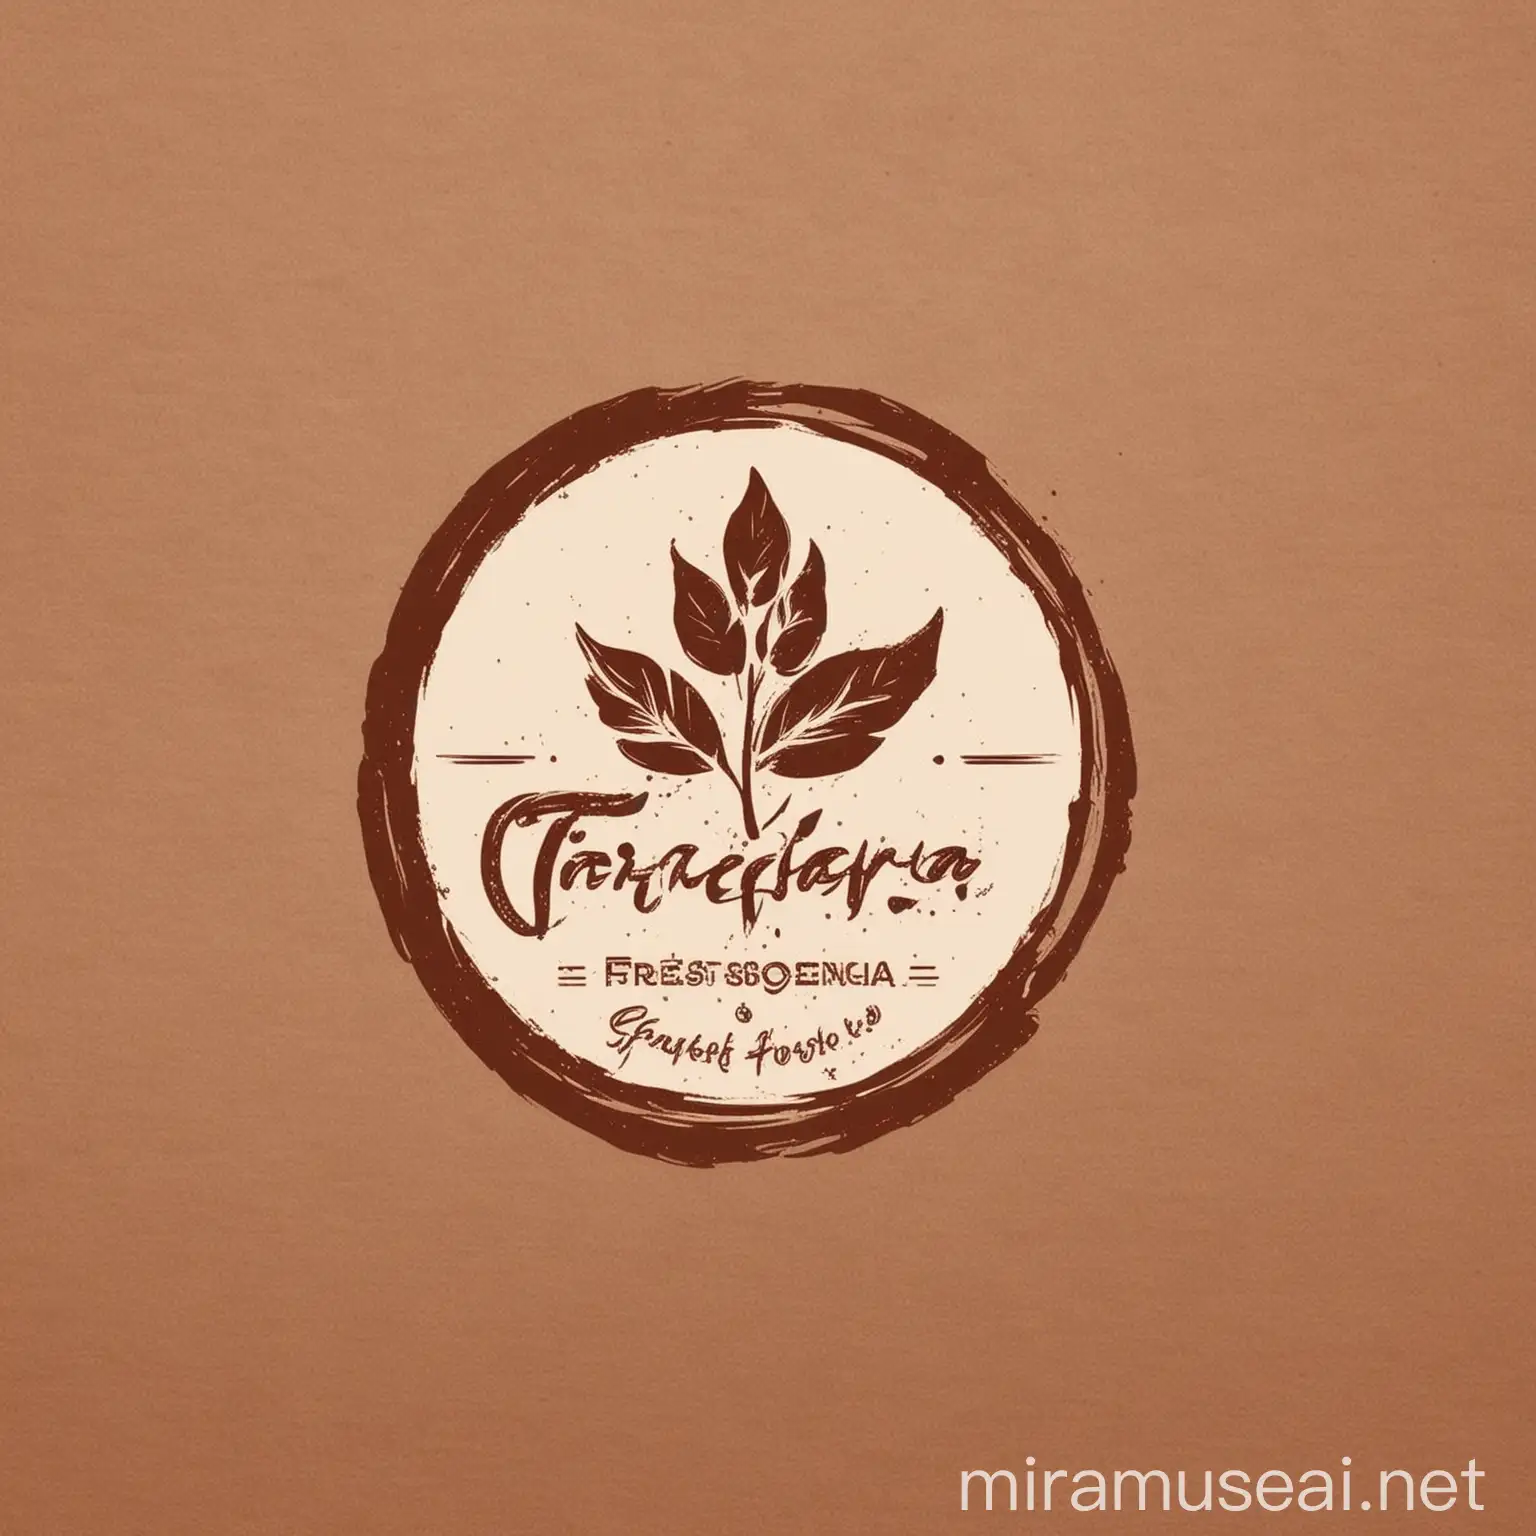 Modern Coffee Roaster Logo Design with ThreeLeaf Branch Highlighting TORREFACTORA LAS 3 GRACIAS